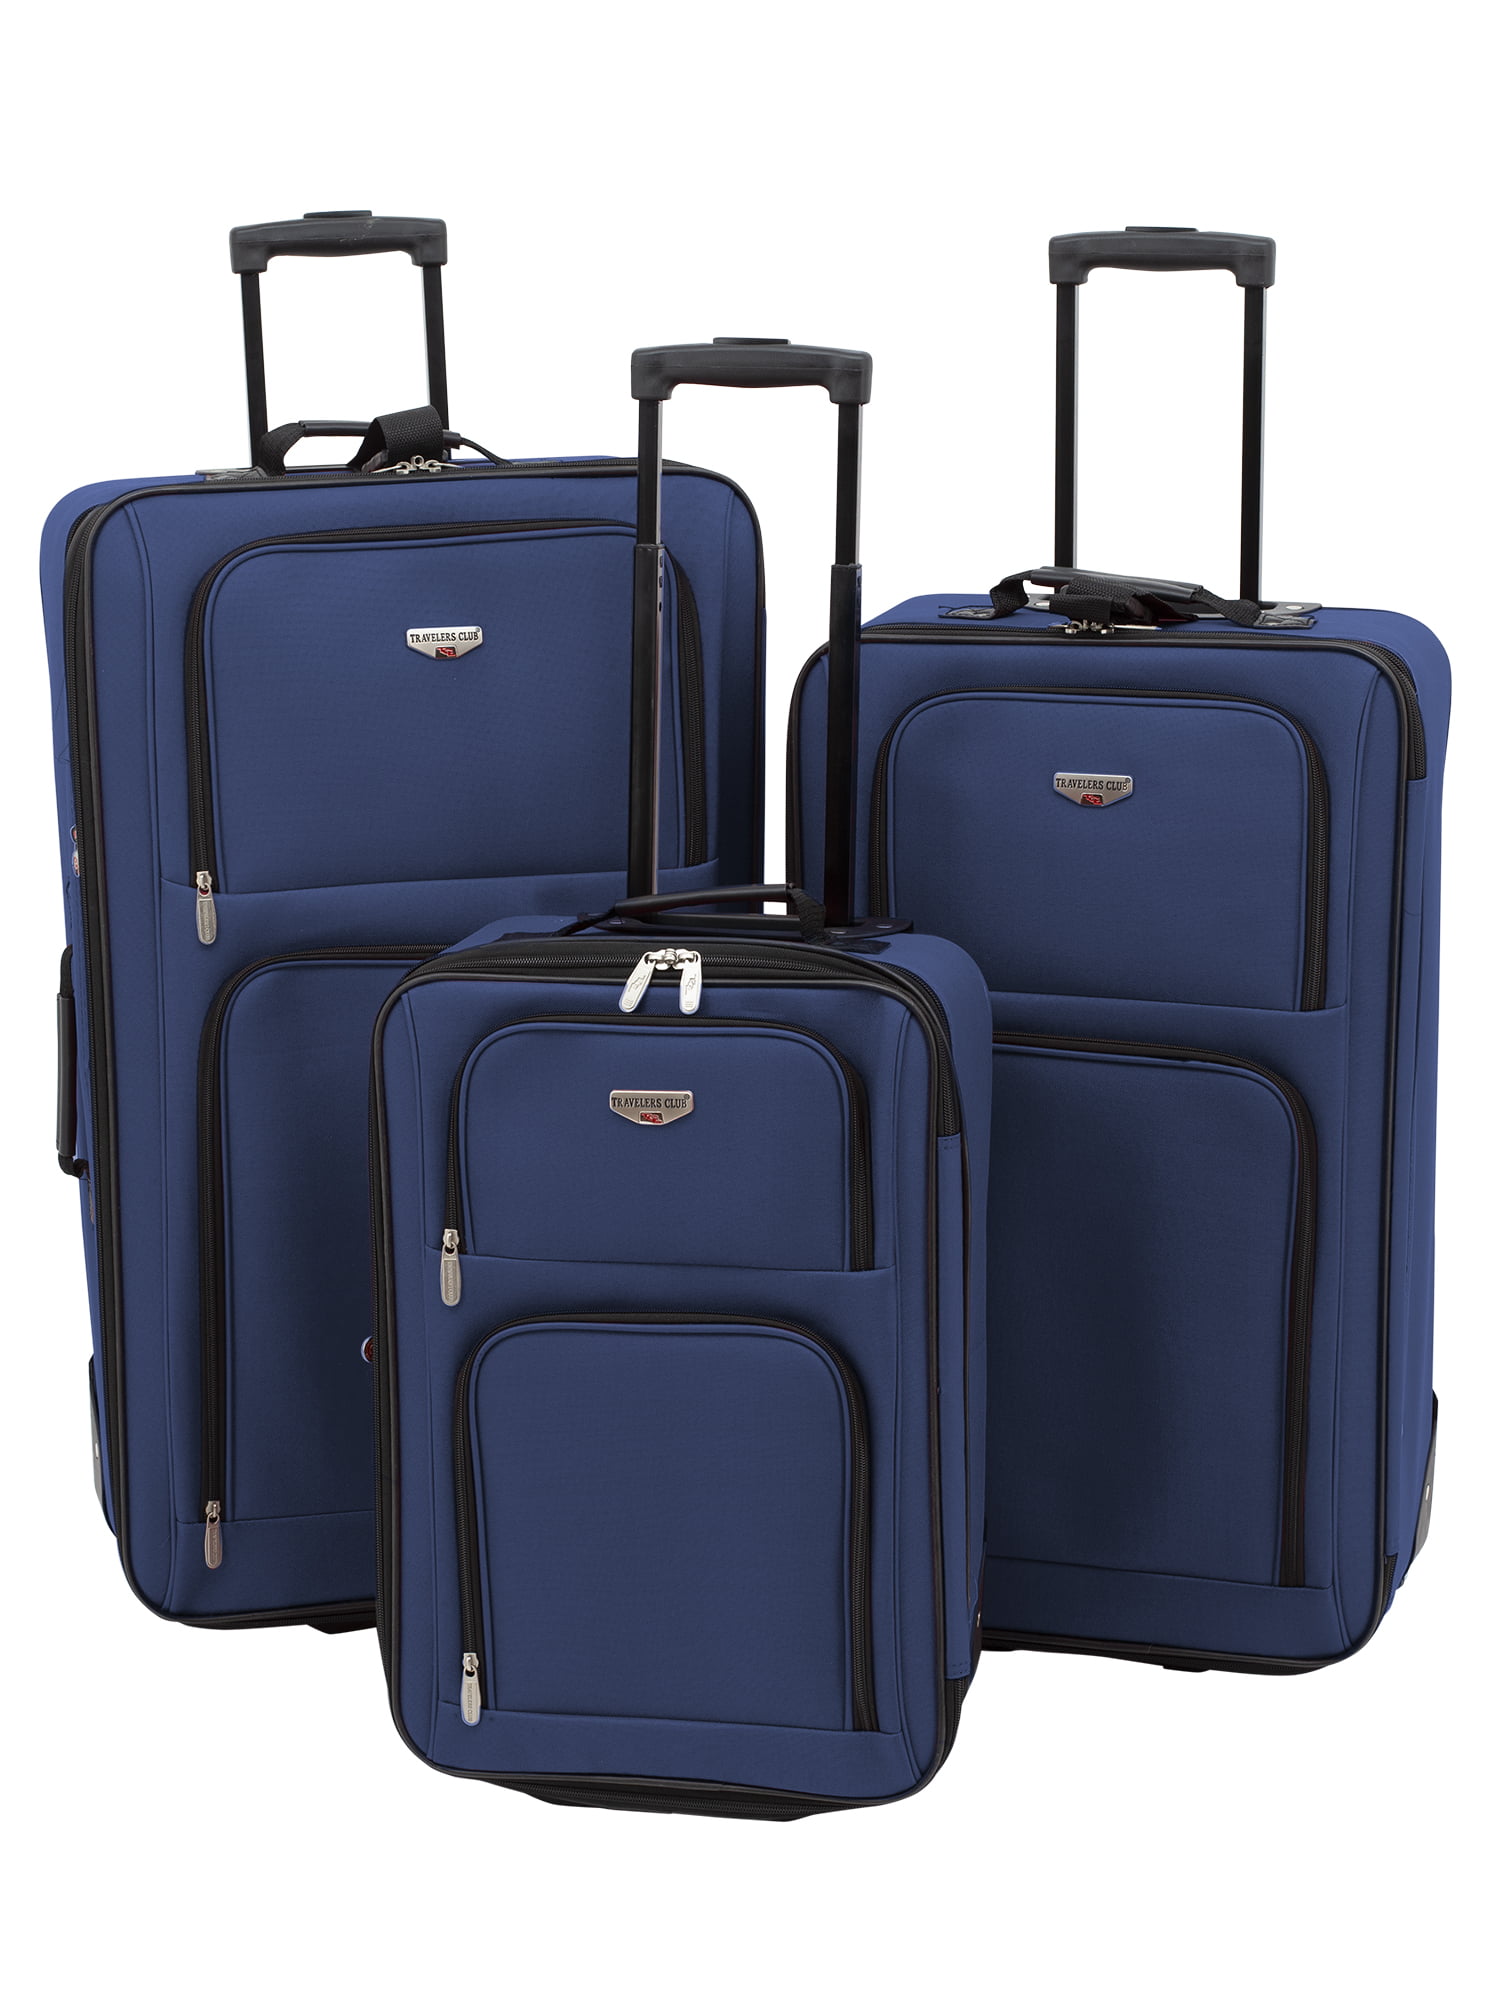 travellers club luggage reviews